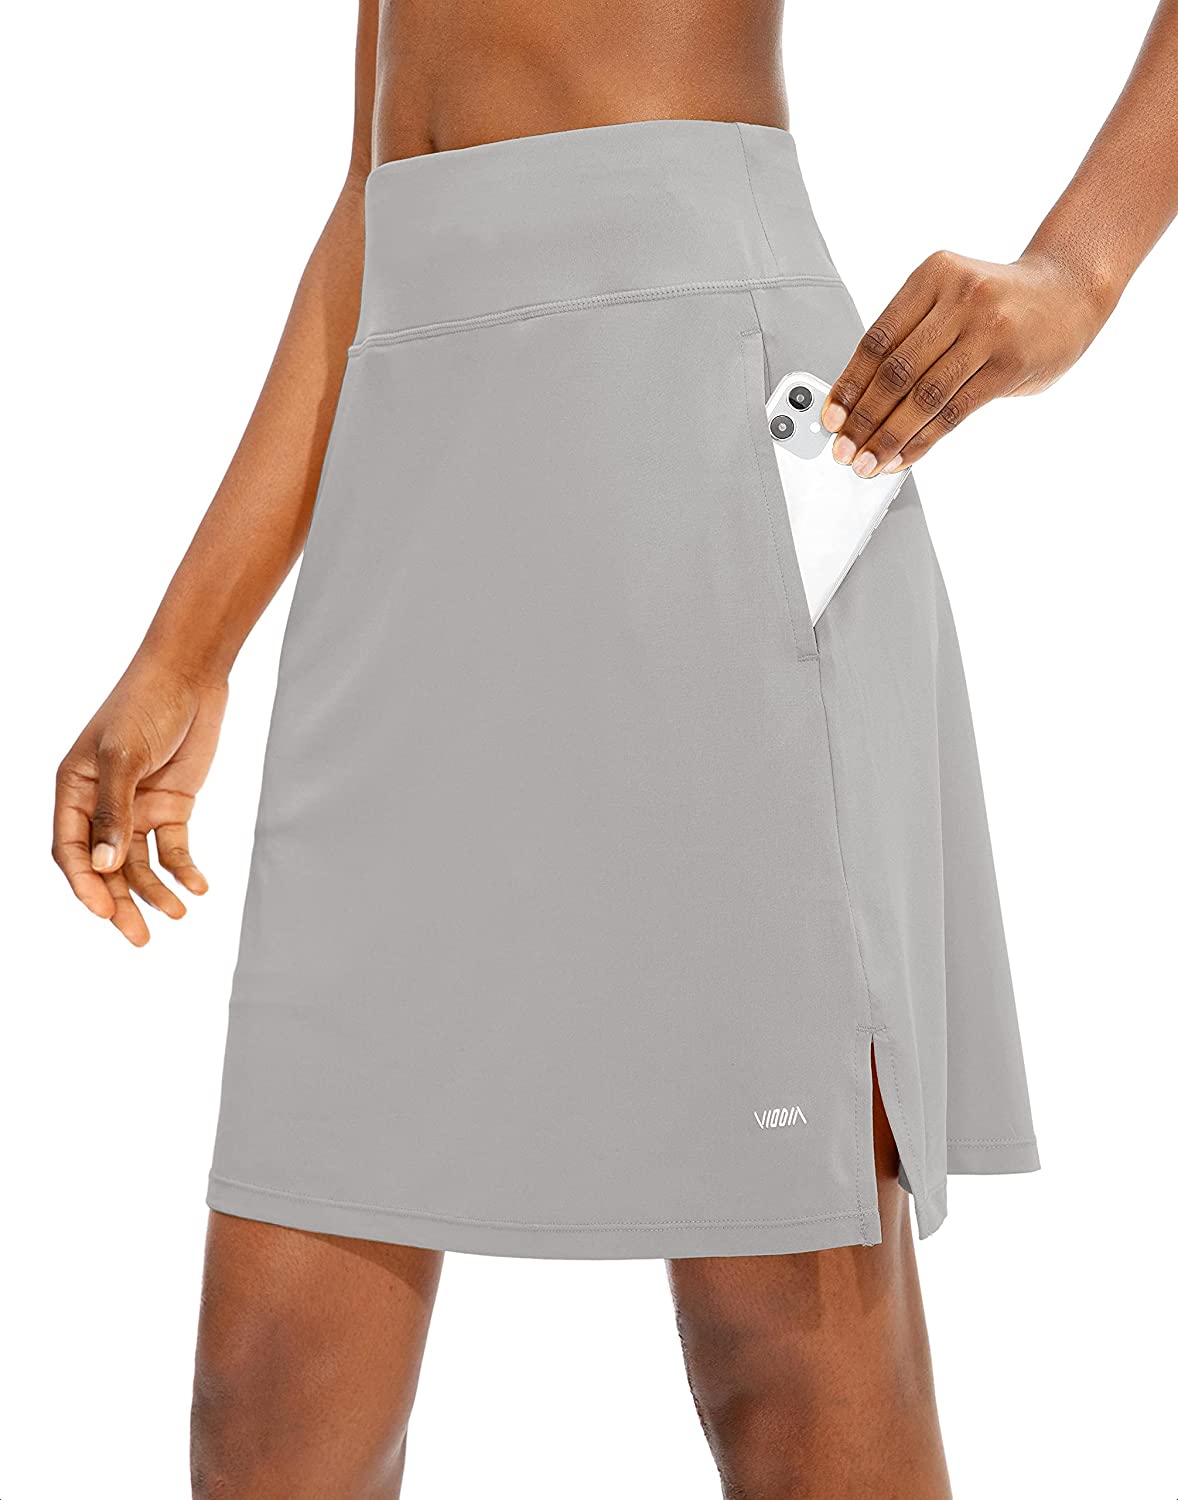 Viodia Women's 20 Knee Length Skorts Skirts UPF50+ Athletic Tennis Golf  Skirt f